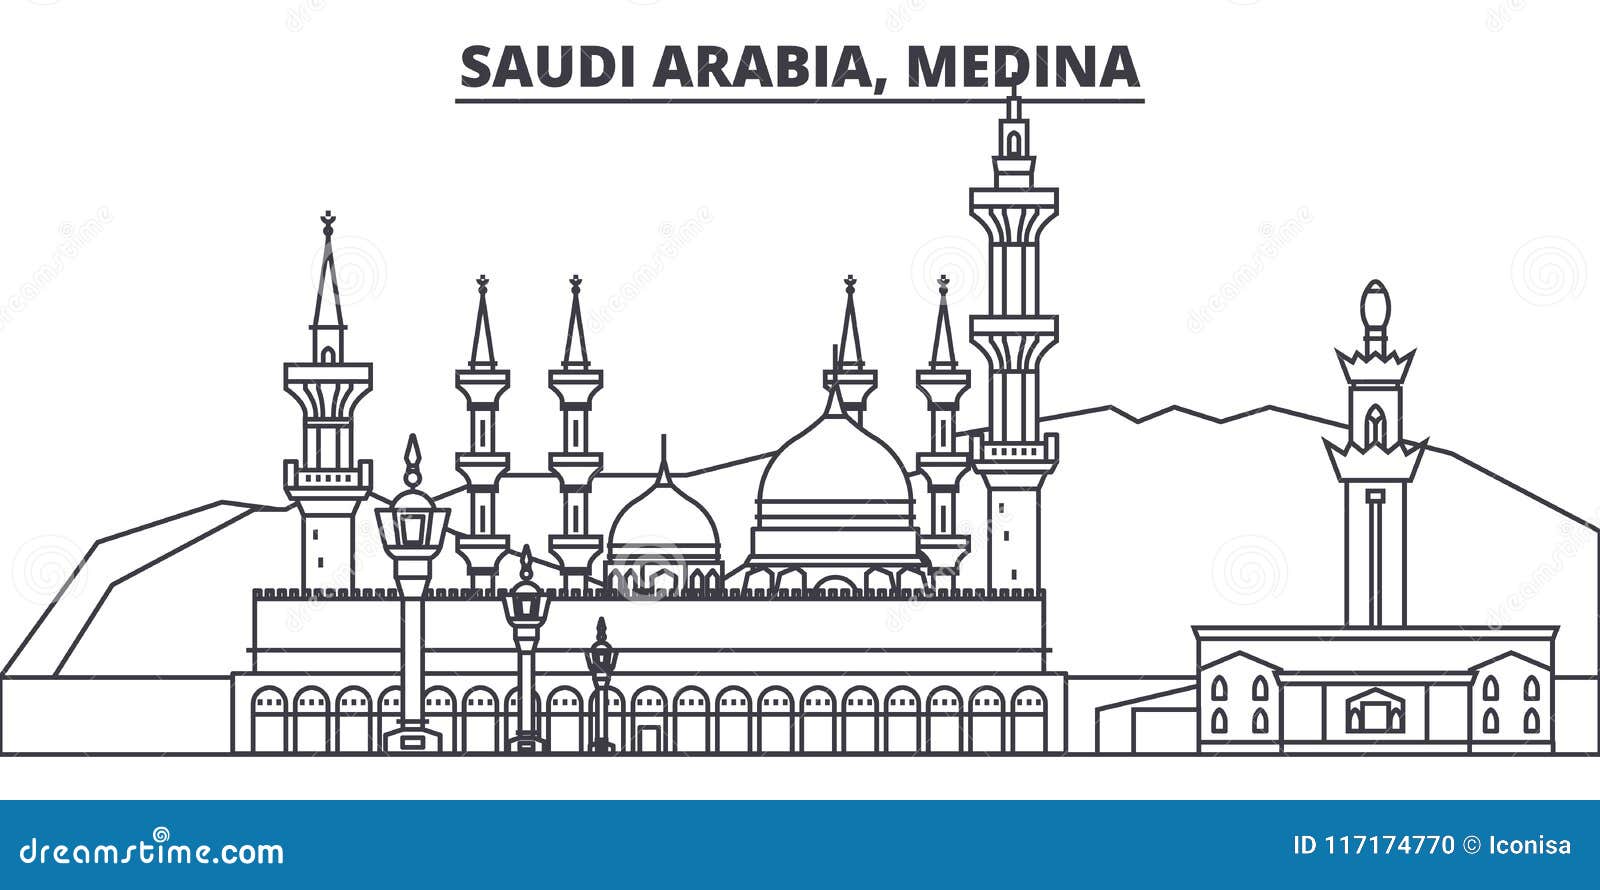 Saudi Arabia, Medina line skyline vector illustration. Saudi Arabia, Medina linear cityscape with famous landmarks, city